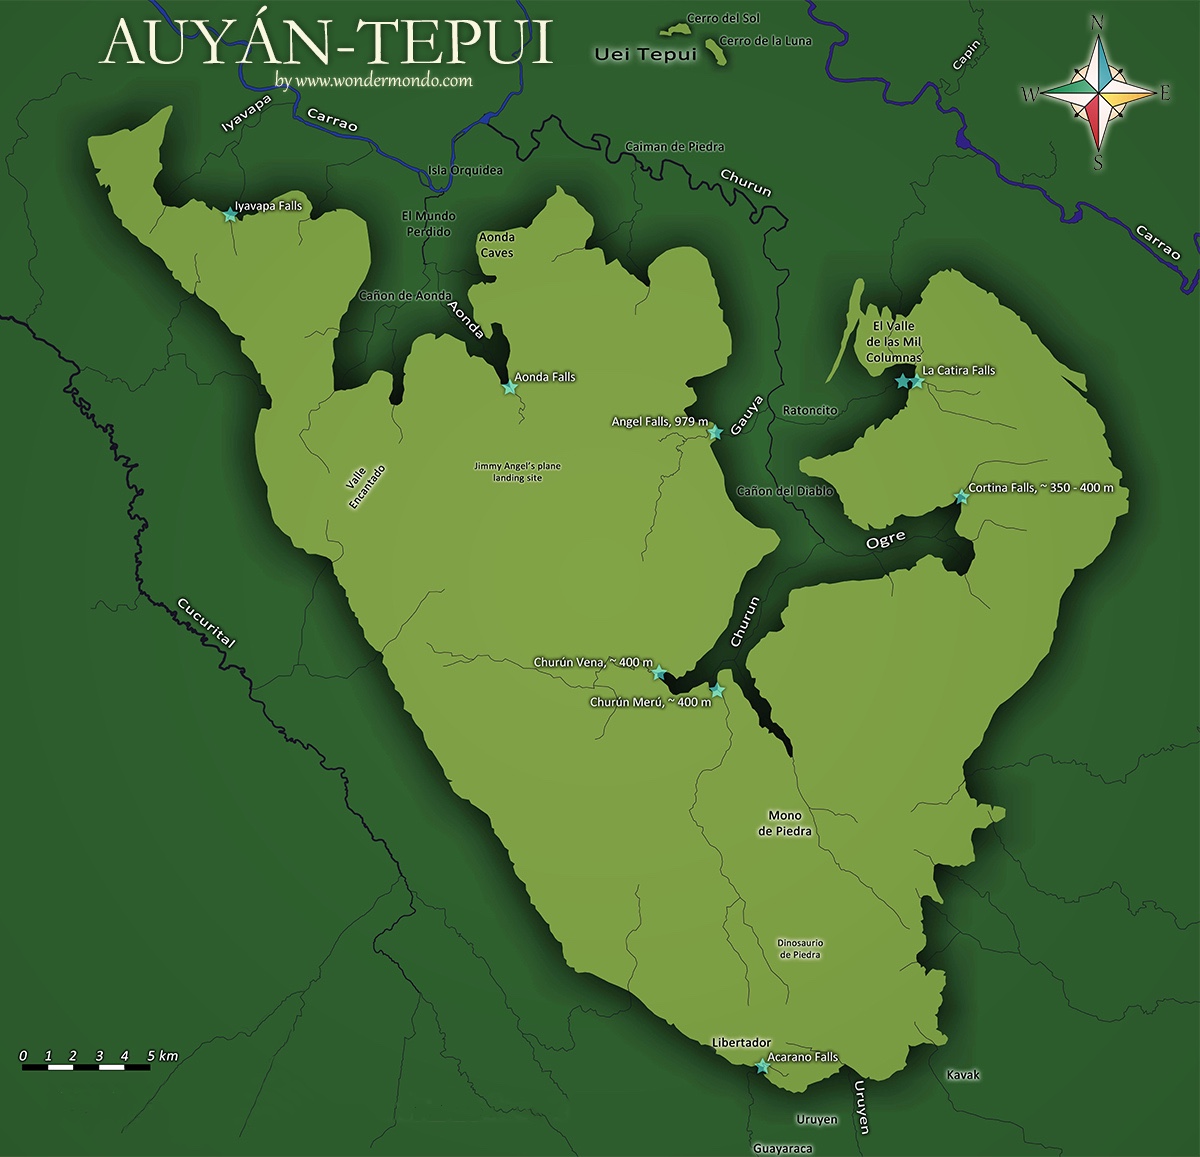 map_of_auyan-tepui_auyantepui.jpg